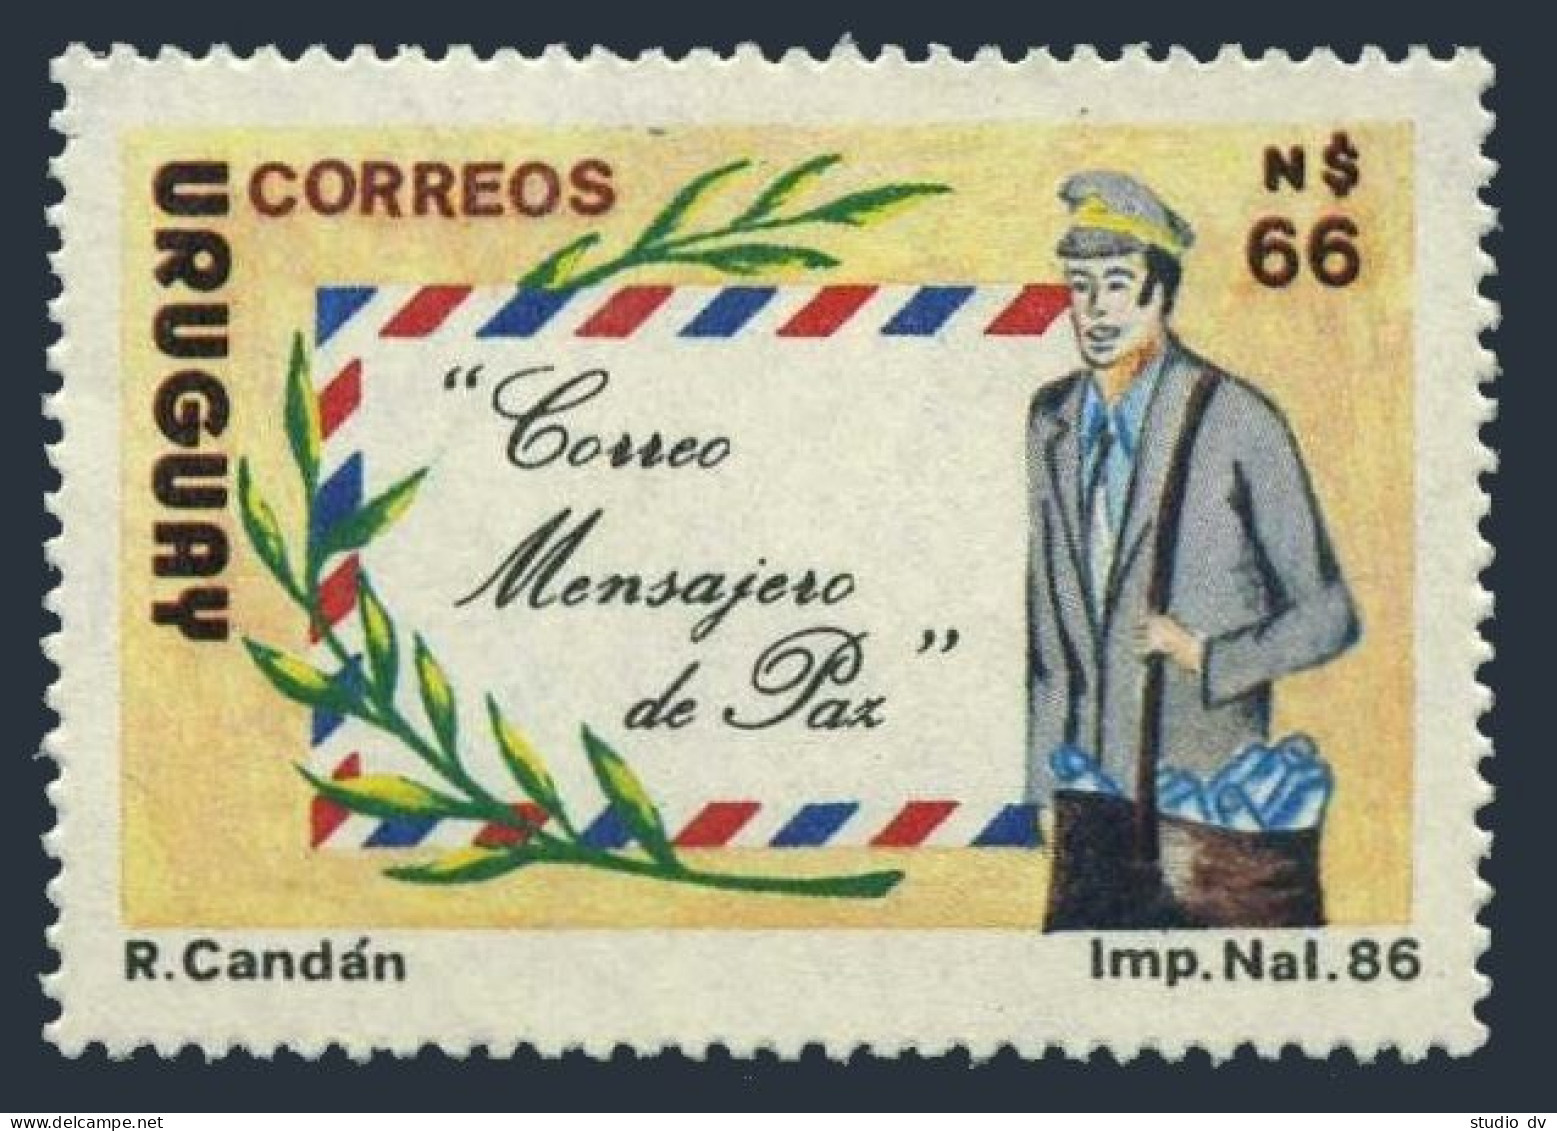 Uruguay 1259, MNH. Michel 1789. Postal Messenger Of Peace, 1988. - Uruguay